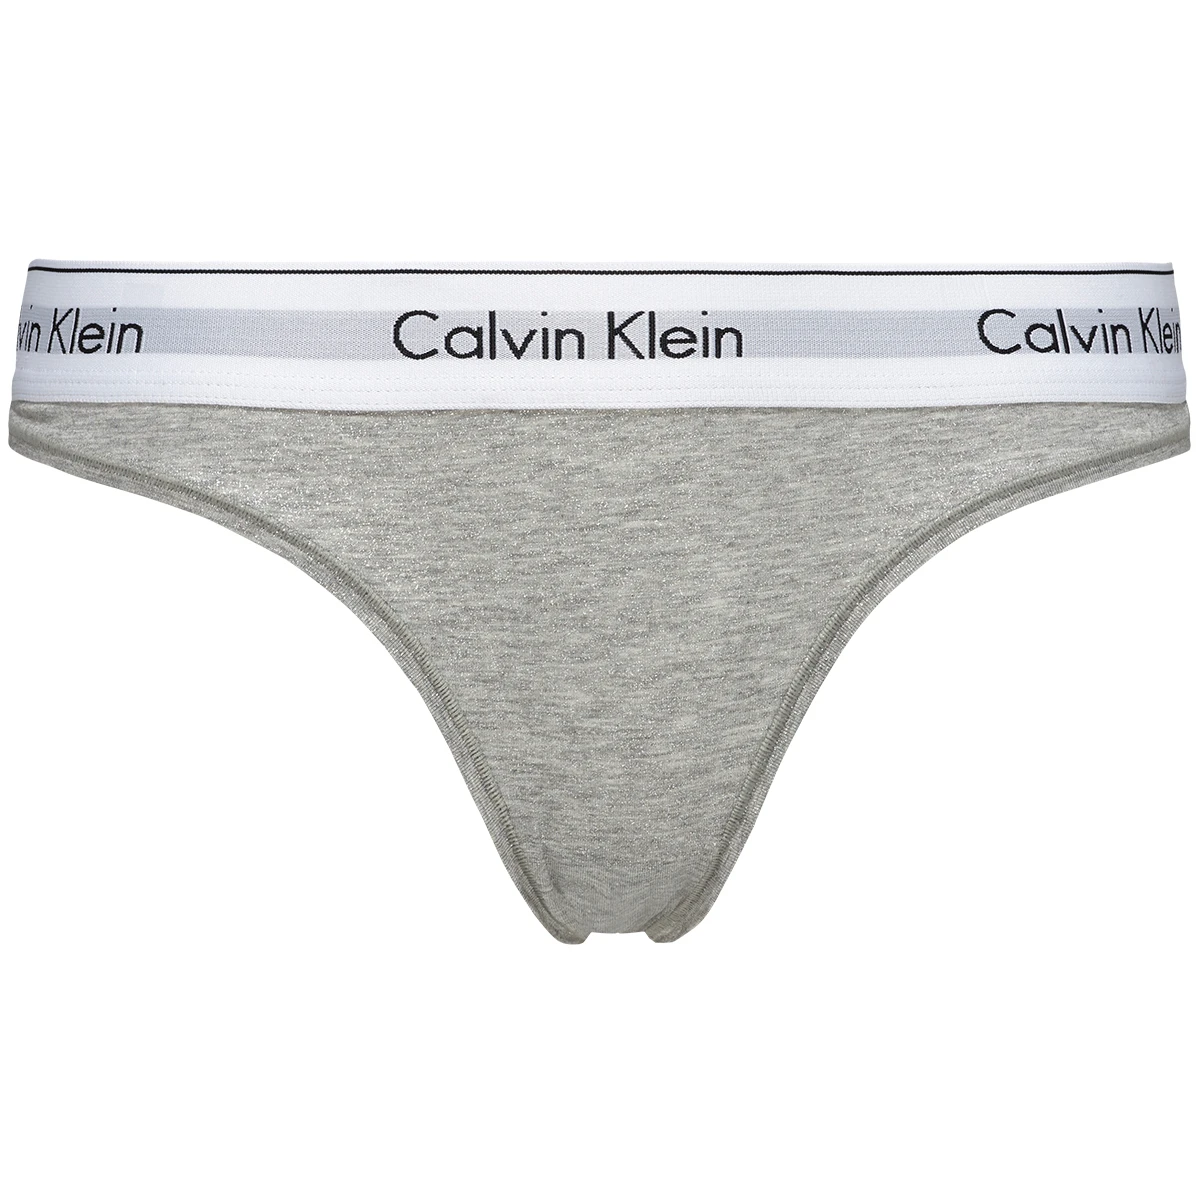 CALVIN KLEIN • KLEIN STRING F3786 020 • Pris